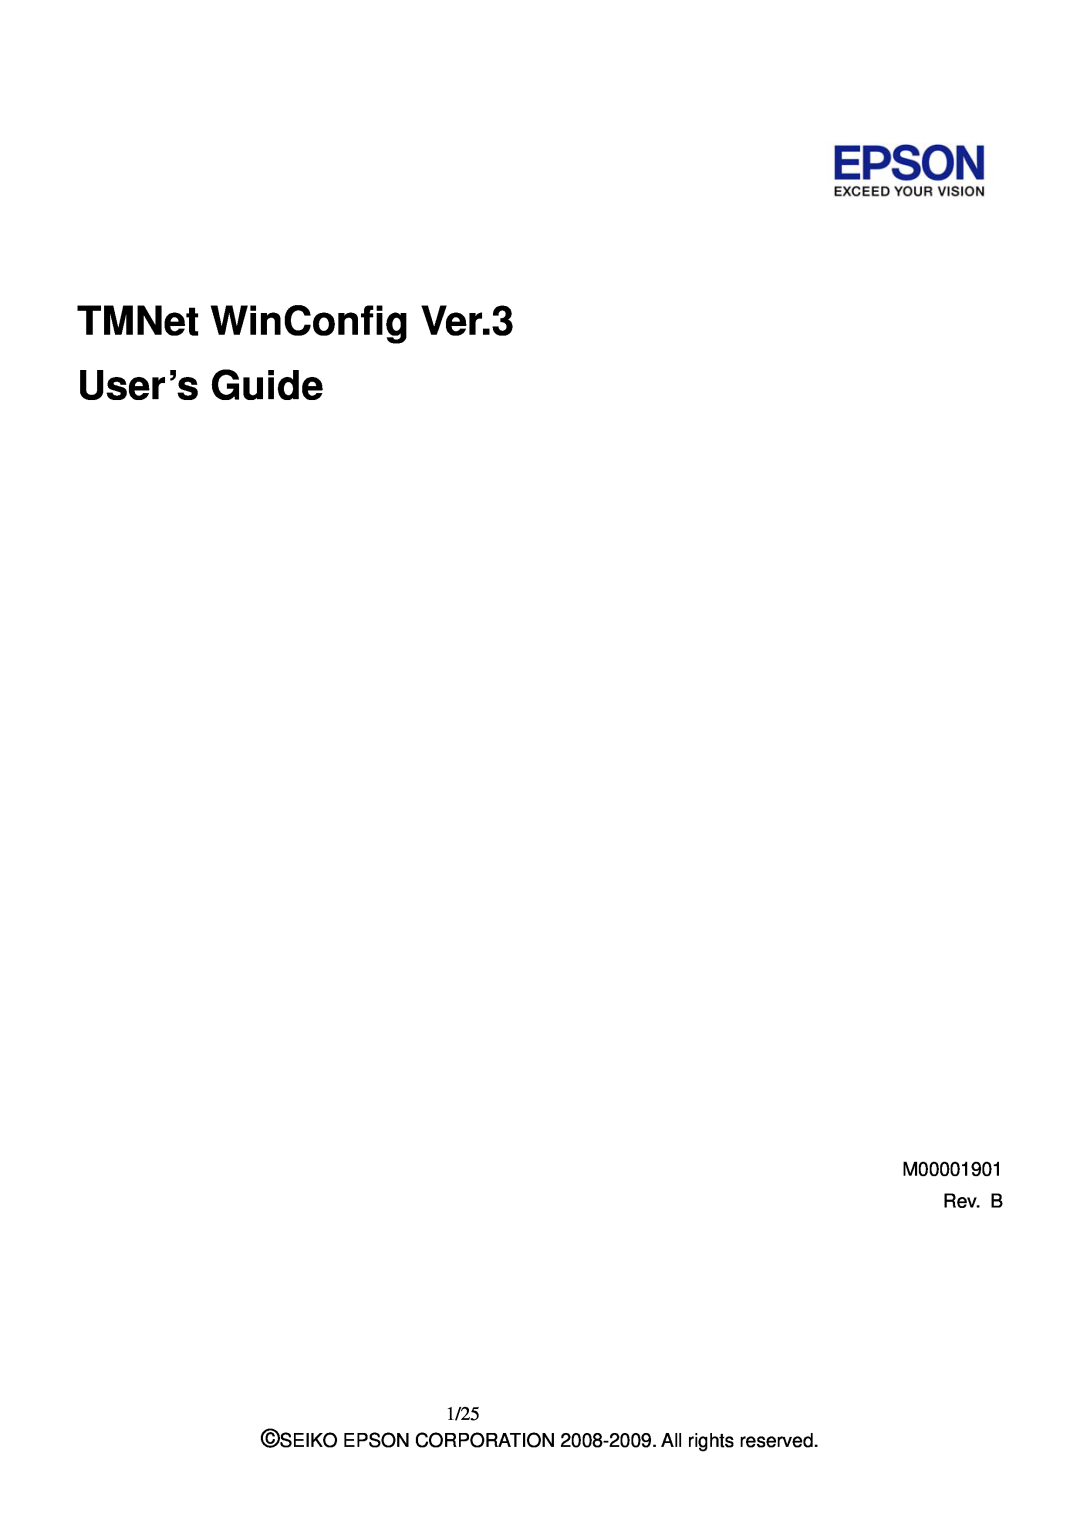 Epson manual 1/25, TMNet WinConfig Ver.3 User’s Guide, M00001901 Rev. B 